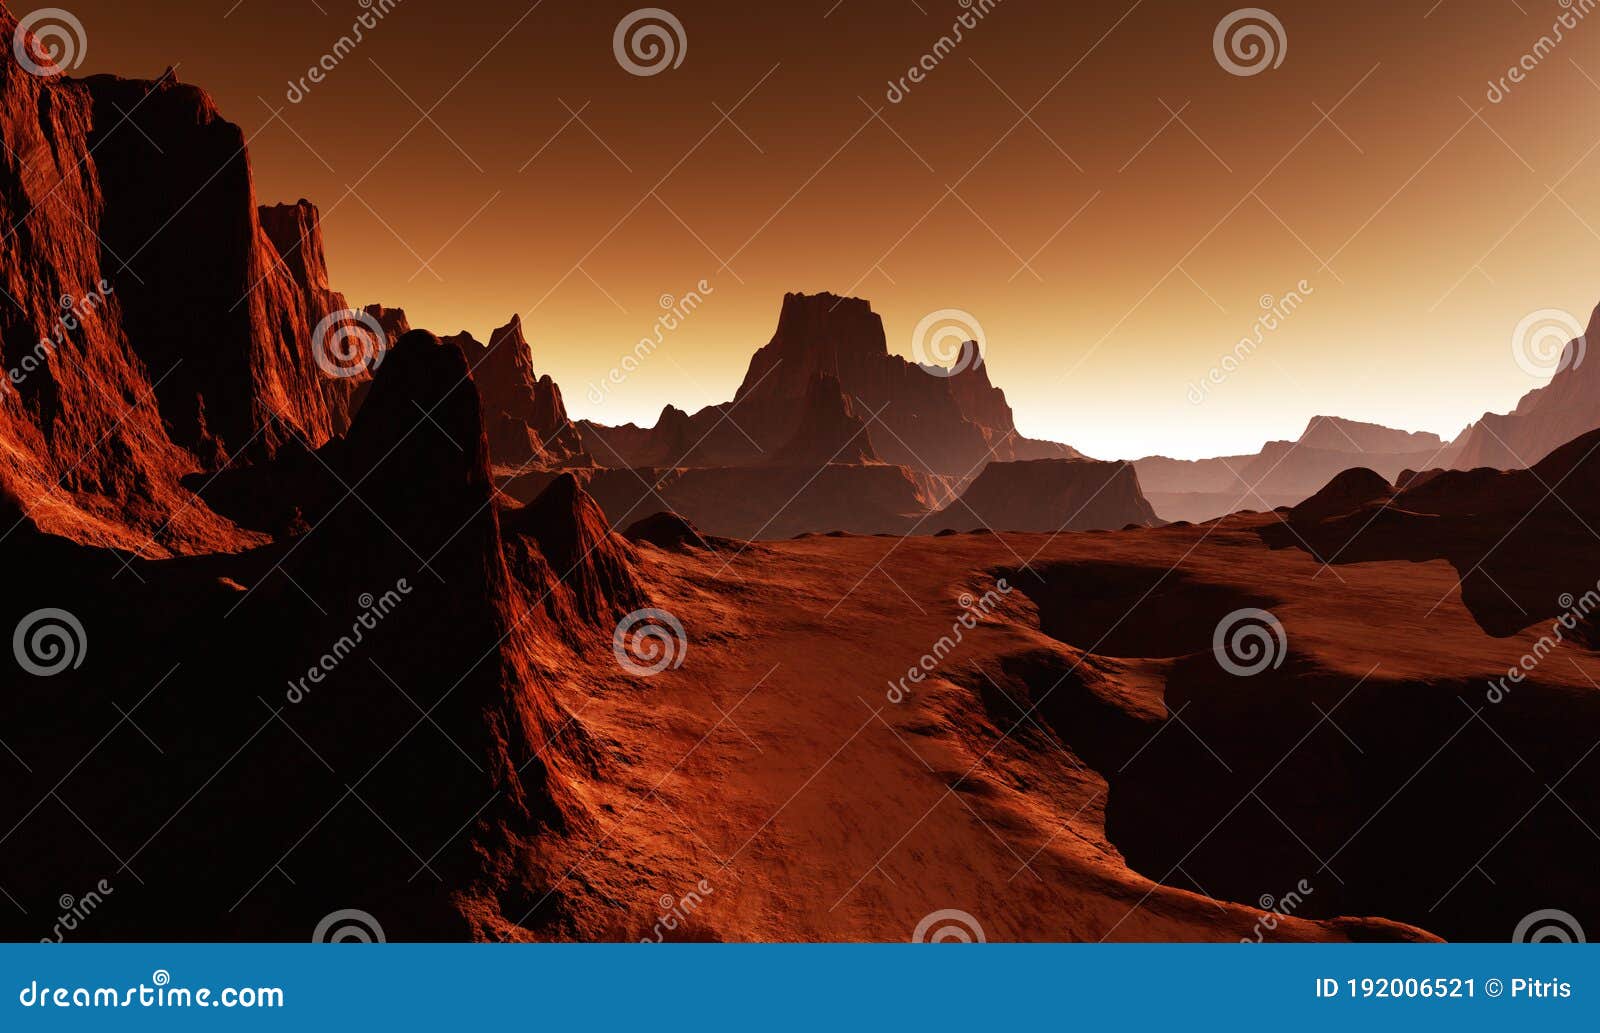 mars - the red planet. cold desert on mars. martian landscape